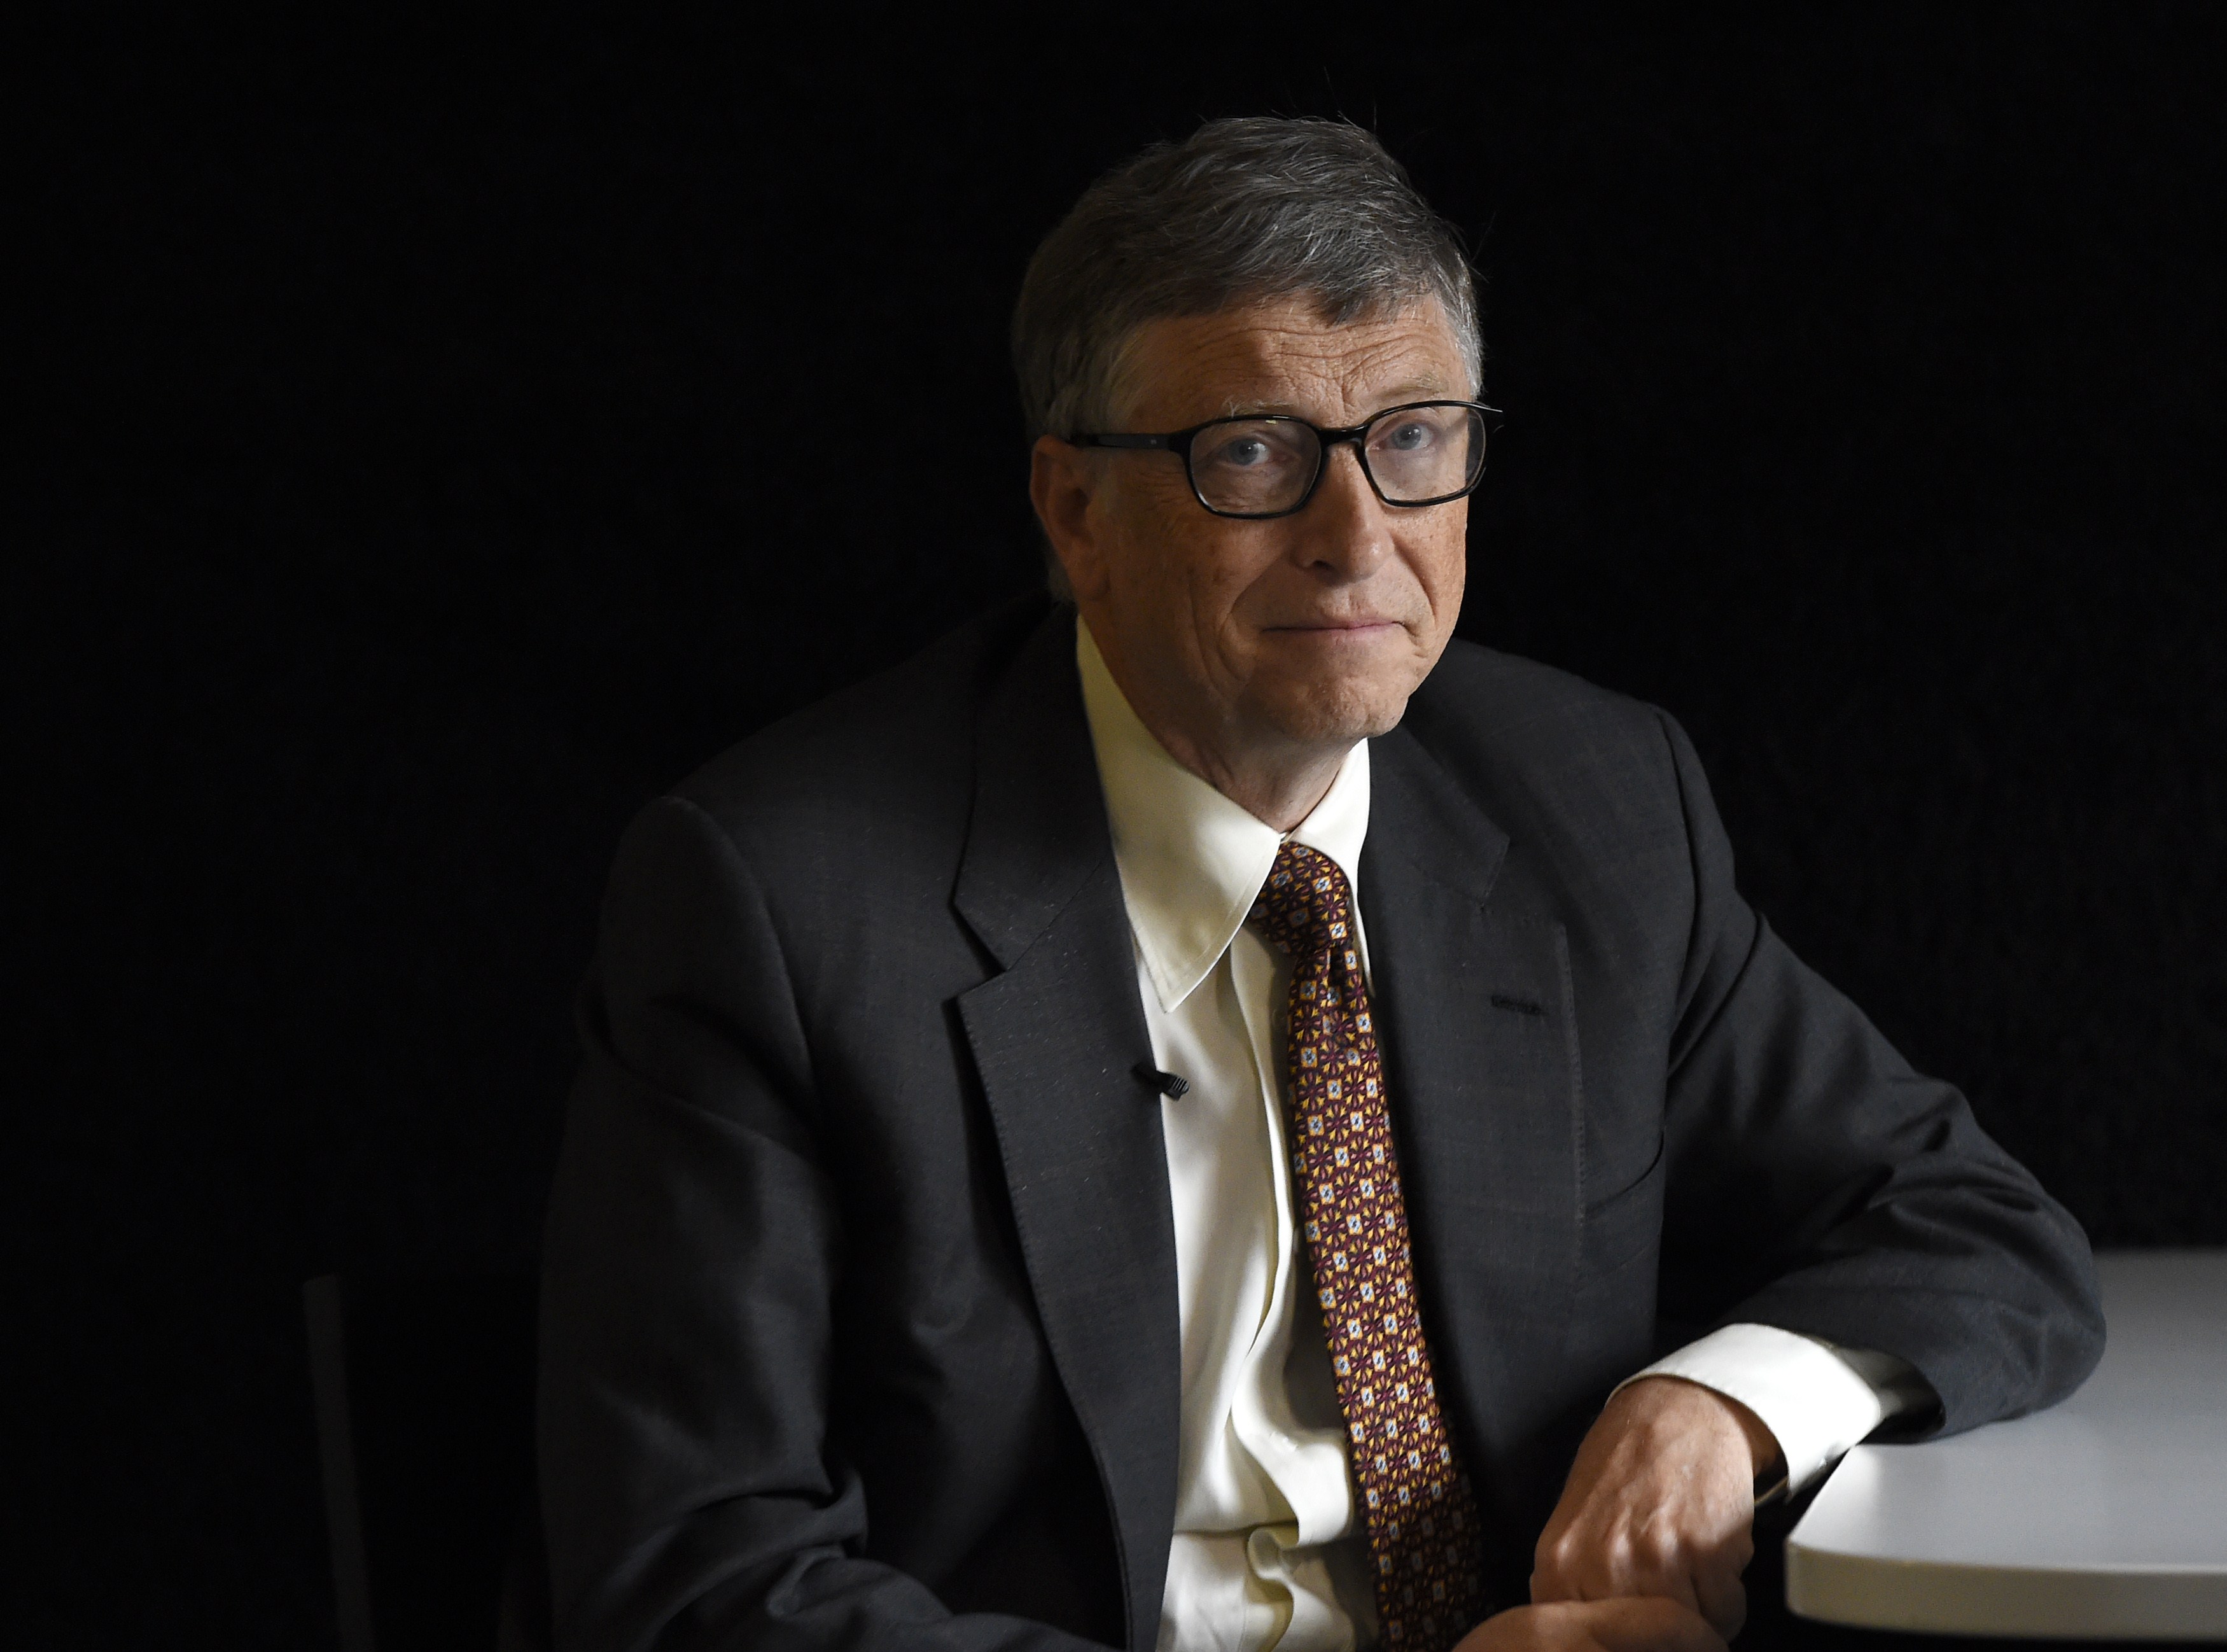 Bill Gates reads 50 books per year.